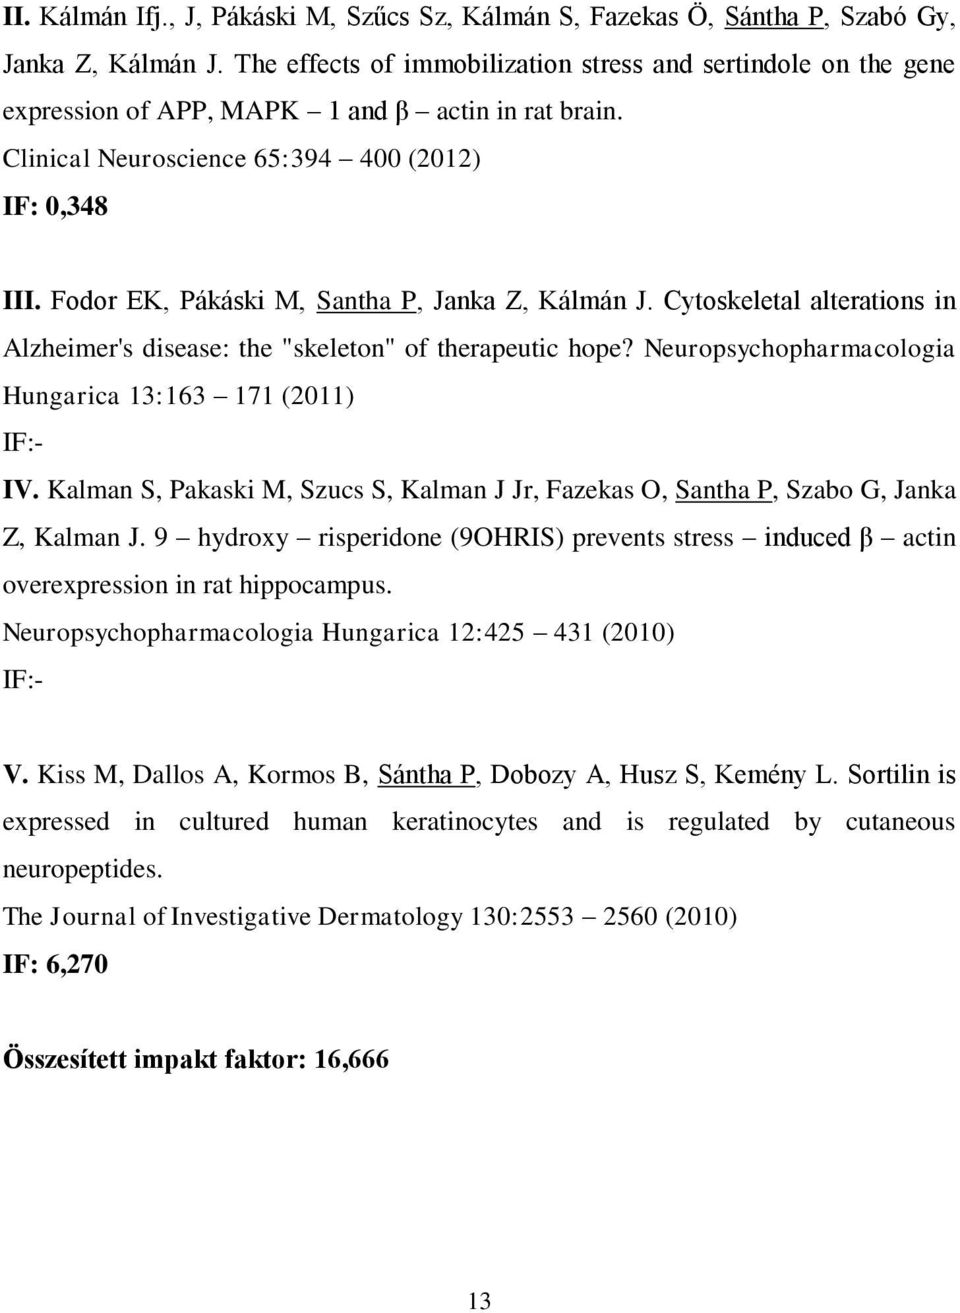 Fodor EK, Pákáski M, Santha P, Janka Z, Kálmán J. Cytoskeletal alterations in Alzheimer's disease: the "skeleton" of therapeutic hope? Neuropsychopharmacologia Hungarica 13:163 171 (2011) IF:- IV.